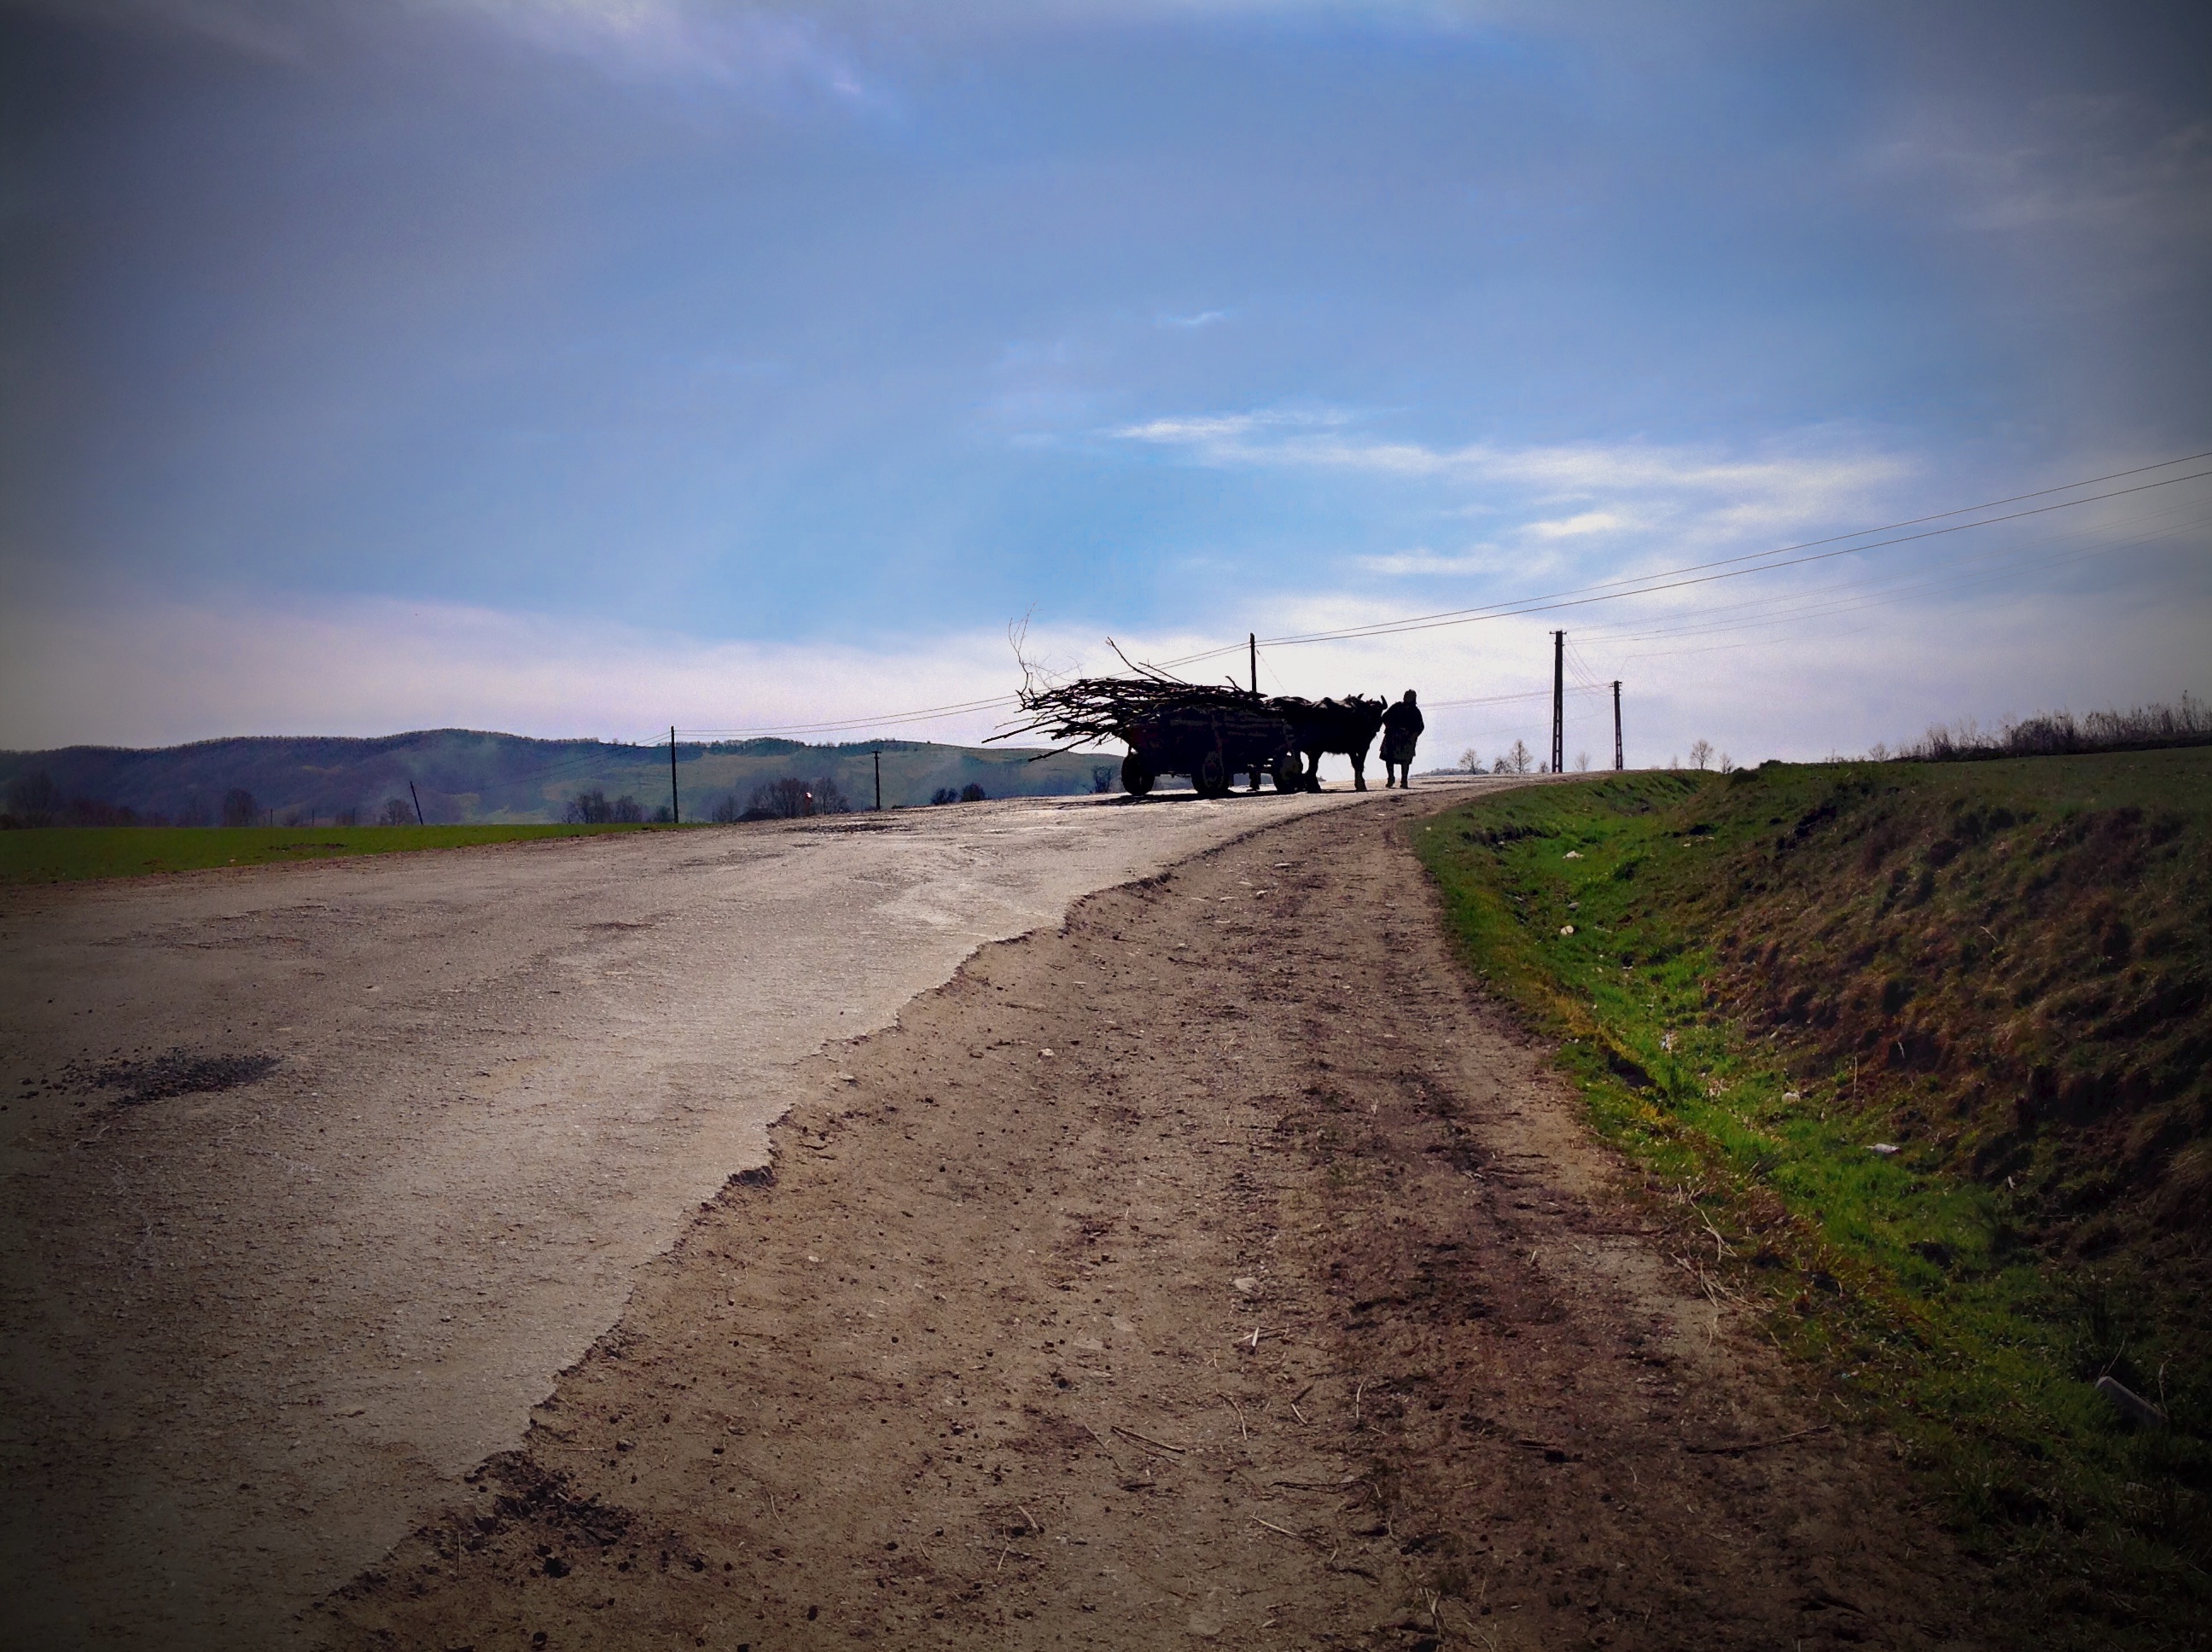 Buffaloes in the road, Romania